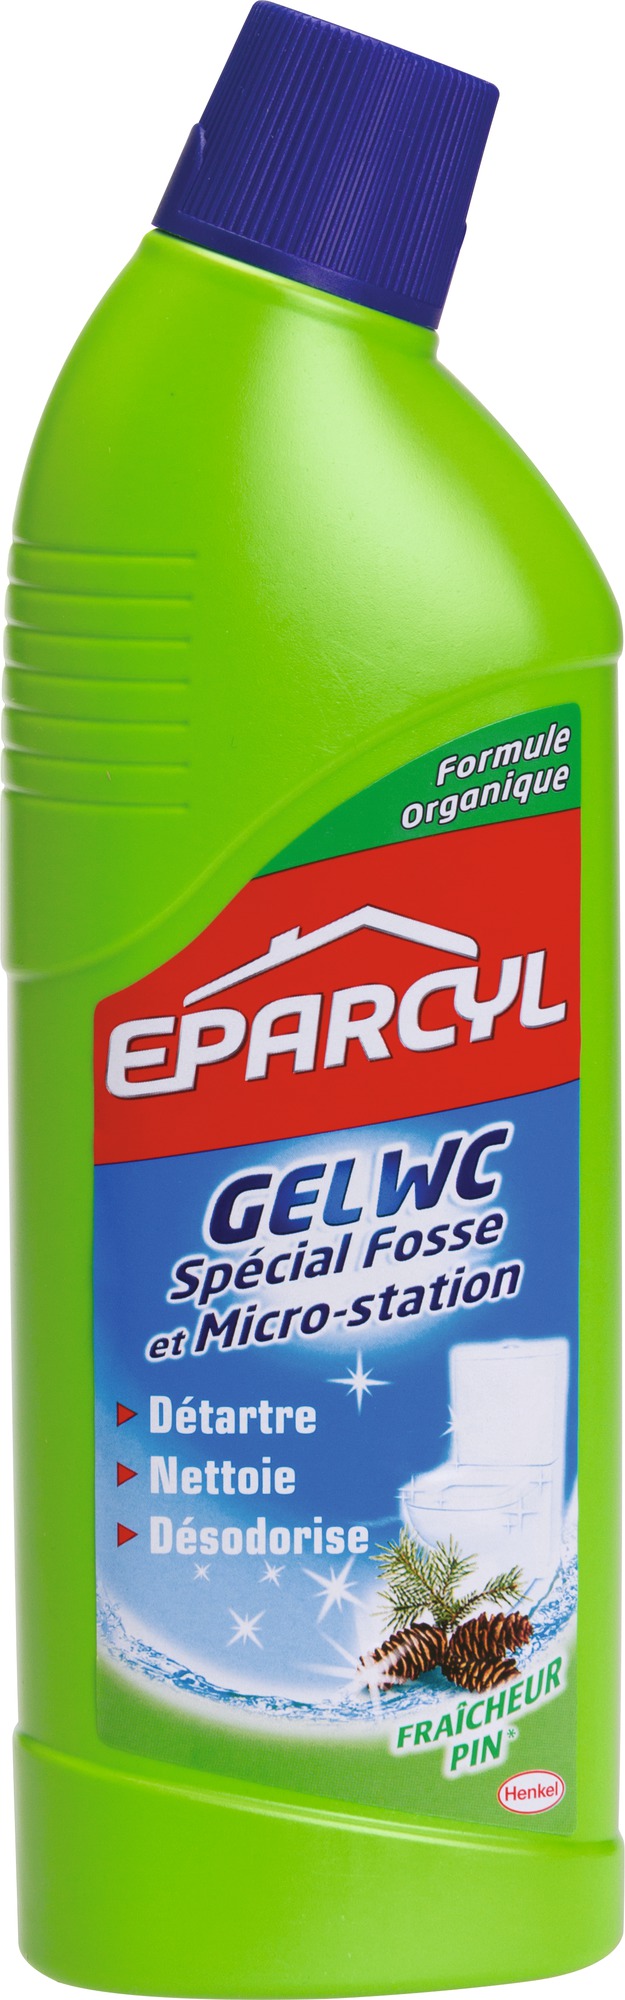 Détartrant WC Clarcyl Eparcyl - Fraicheur pin - Flacon 750 ml